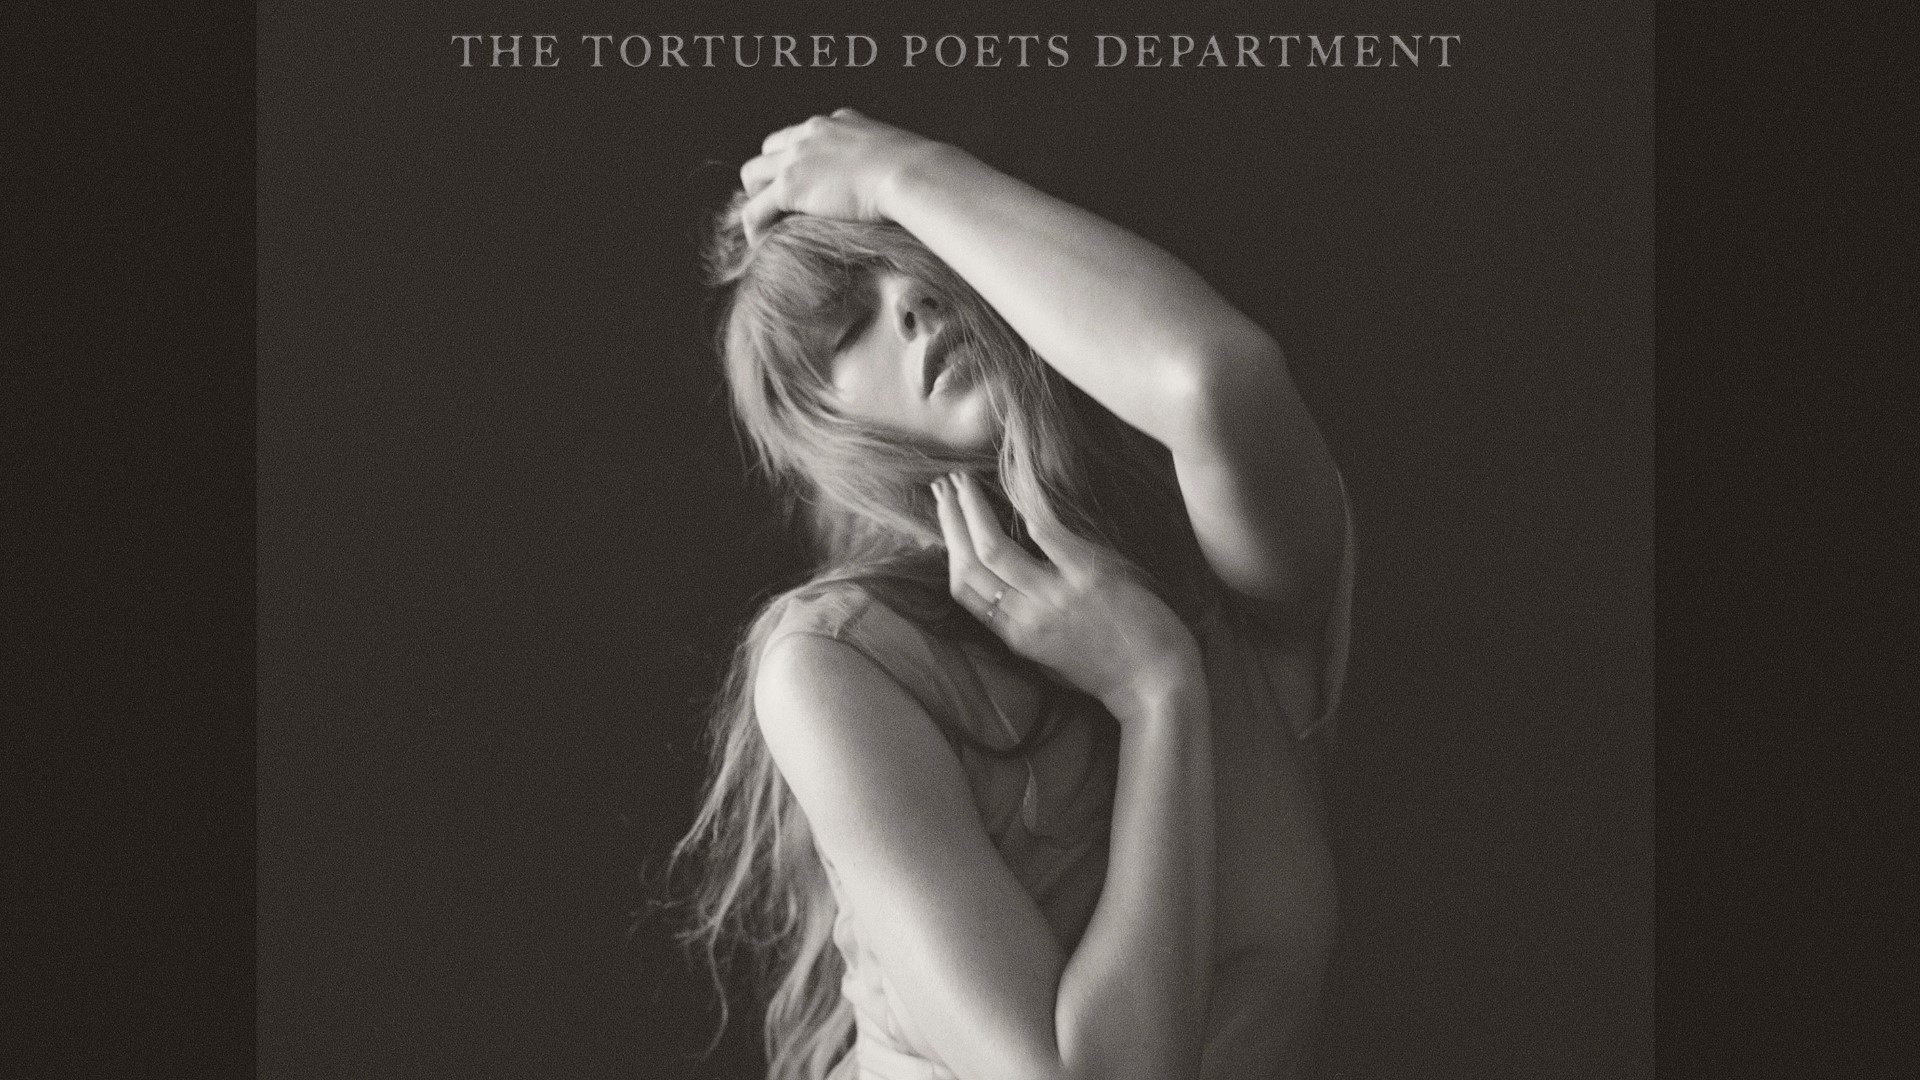 Taylor Swift's 'Tortured Poets Department' is secret double album